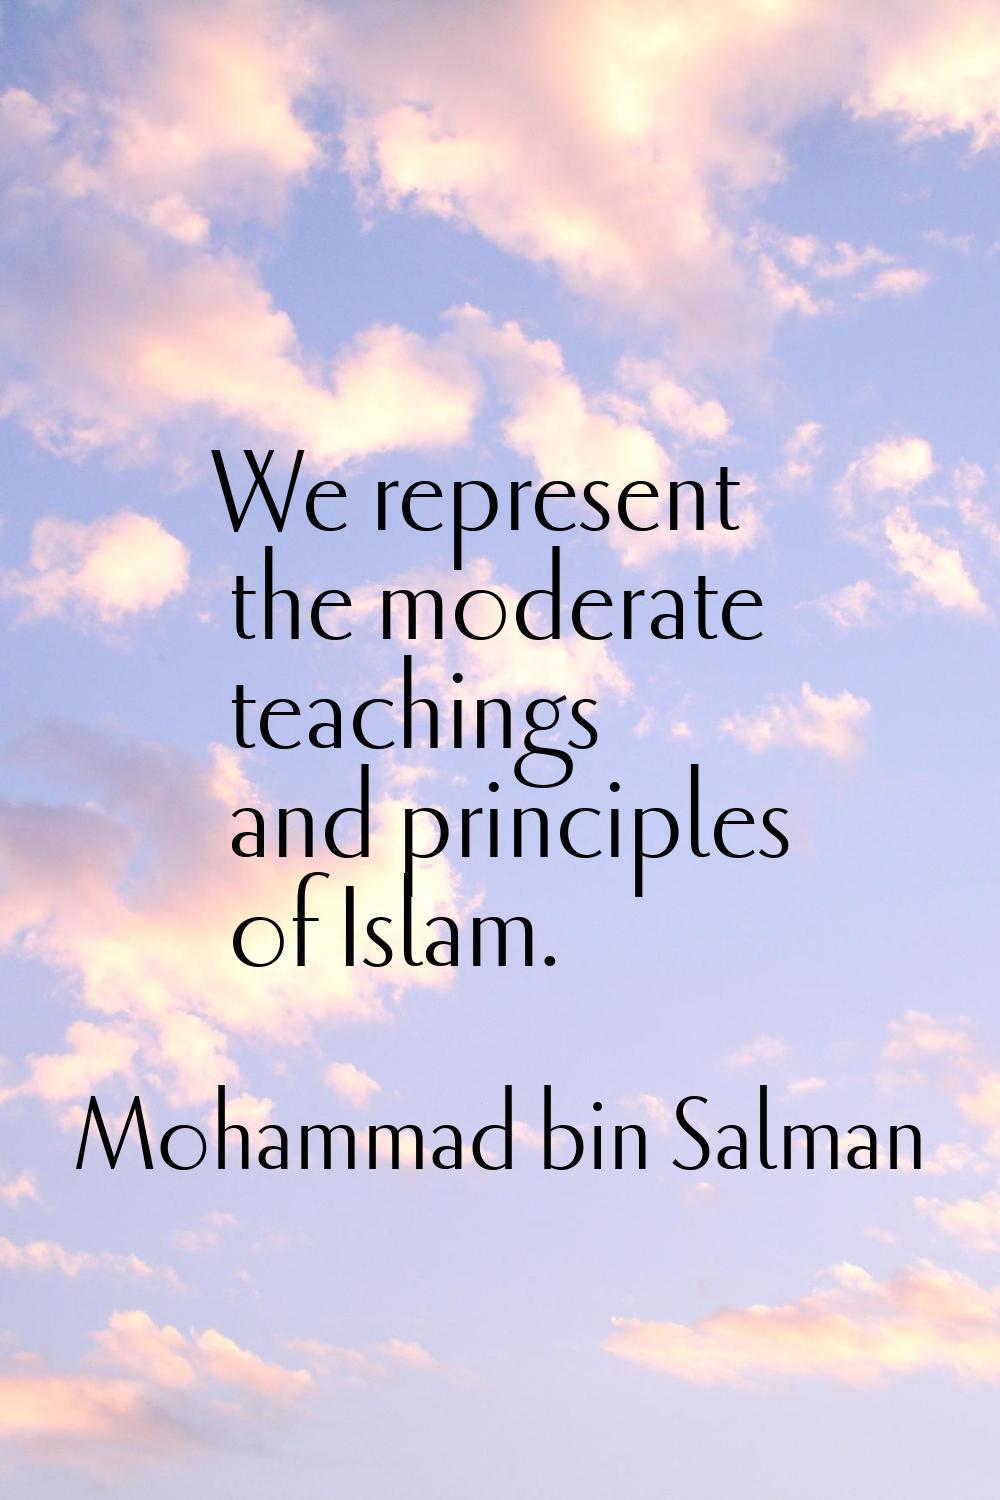 We represent the moderate teachings and principles of Islam.